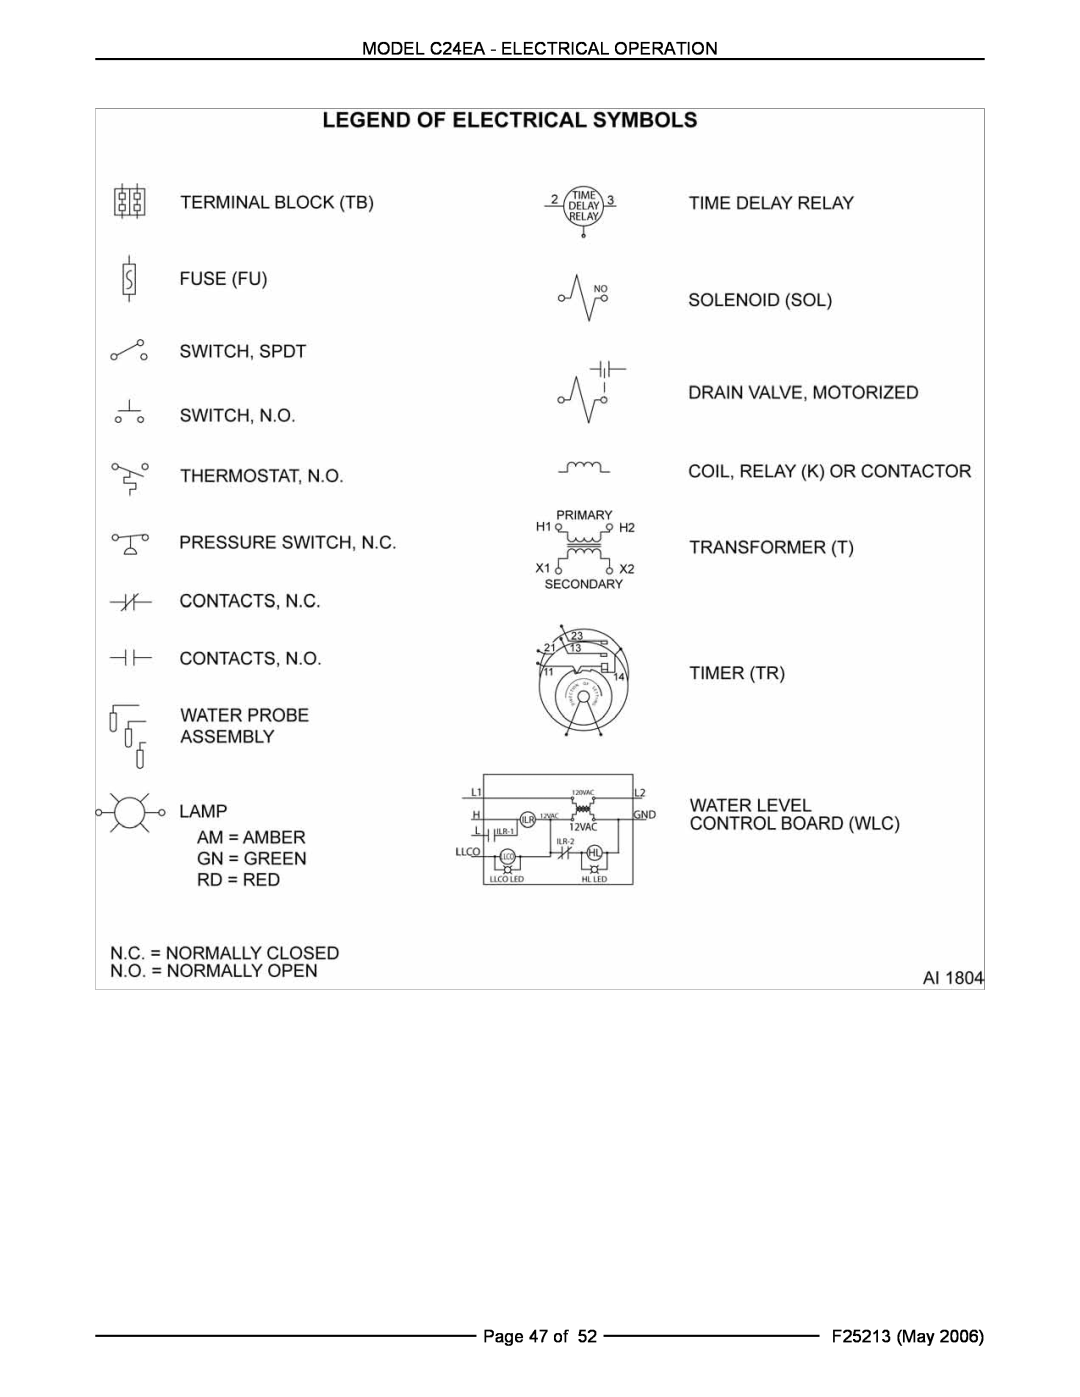 Vulcan-Hart C24EA5 208/240V BASIC, C24EA5 480V BASIC MODEL C24EA - ELECTRICAL OPERATION, Page 47 of, F25213 May 